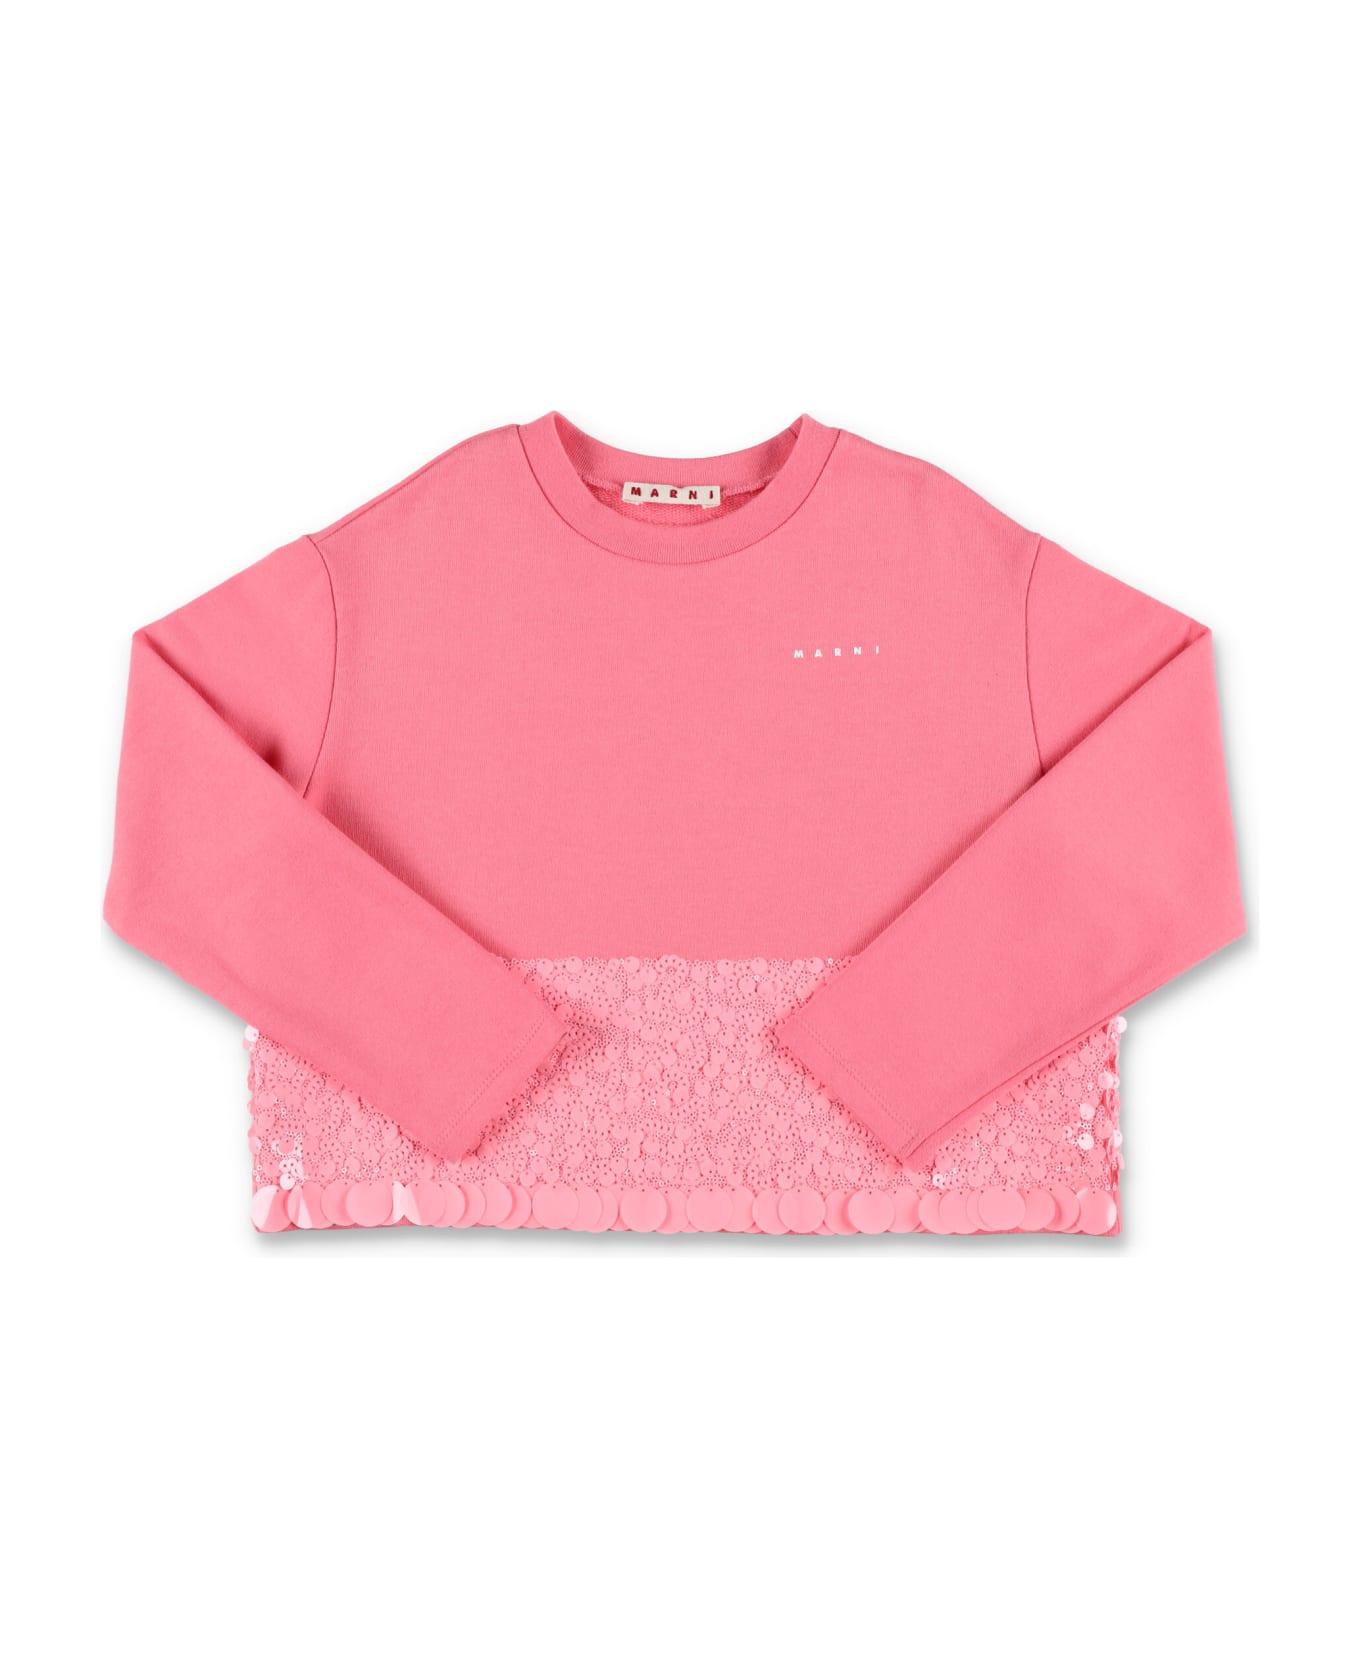 Marni Cropped Fleece - PINK ニットウェア＆スウェットシャツ